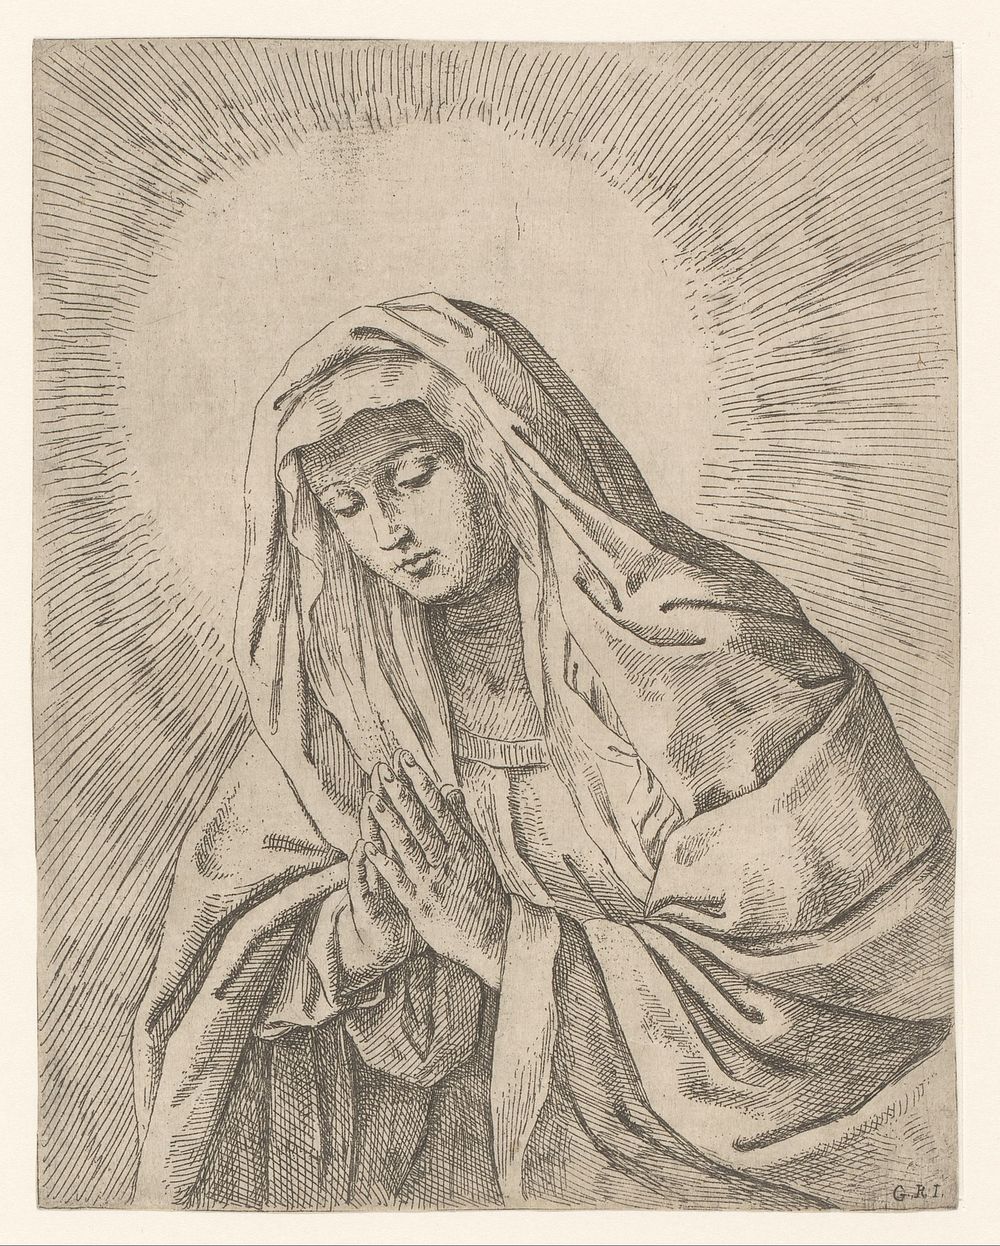 Maria in gebed (1660 - 1680) by Girolamo Scarselli and Guido Reni